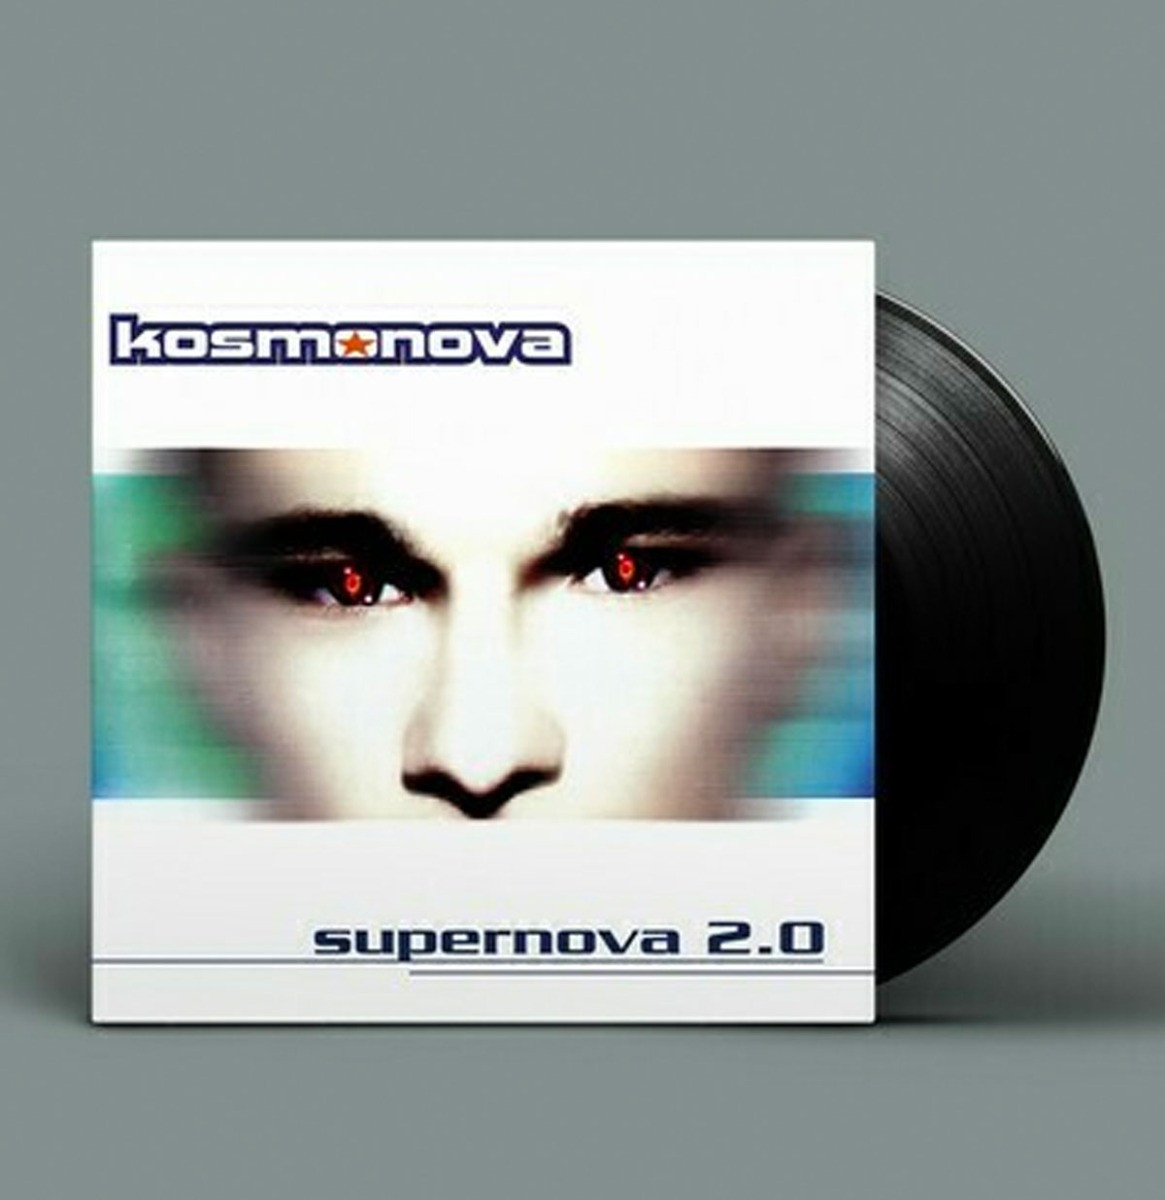 Kosmonova - Supernova 2.0 LP VERY LIMITED